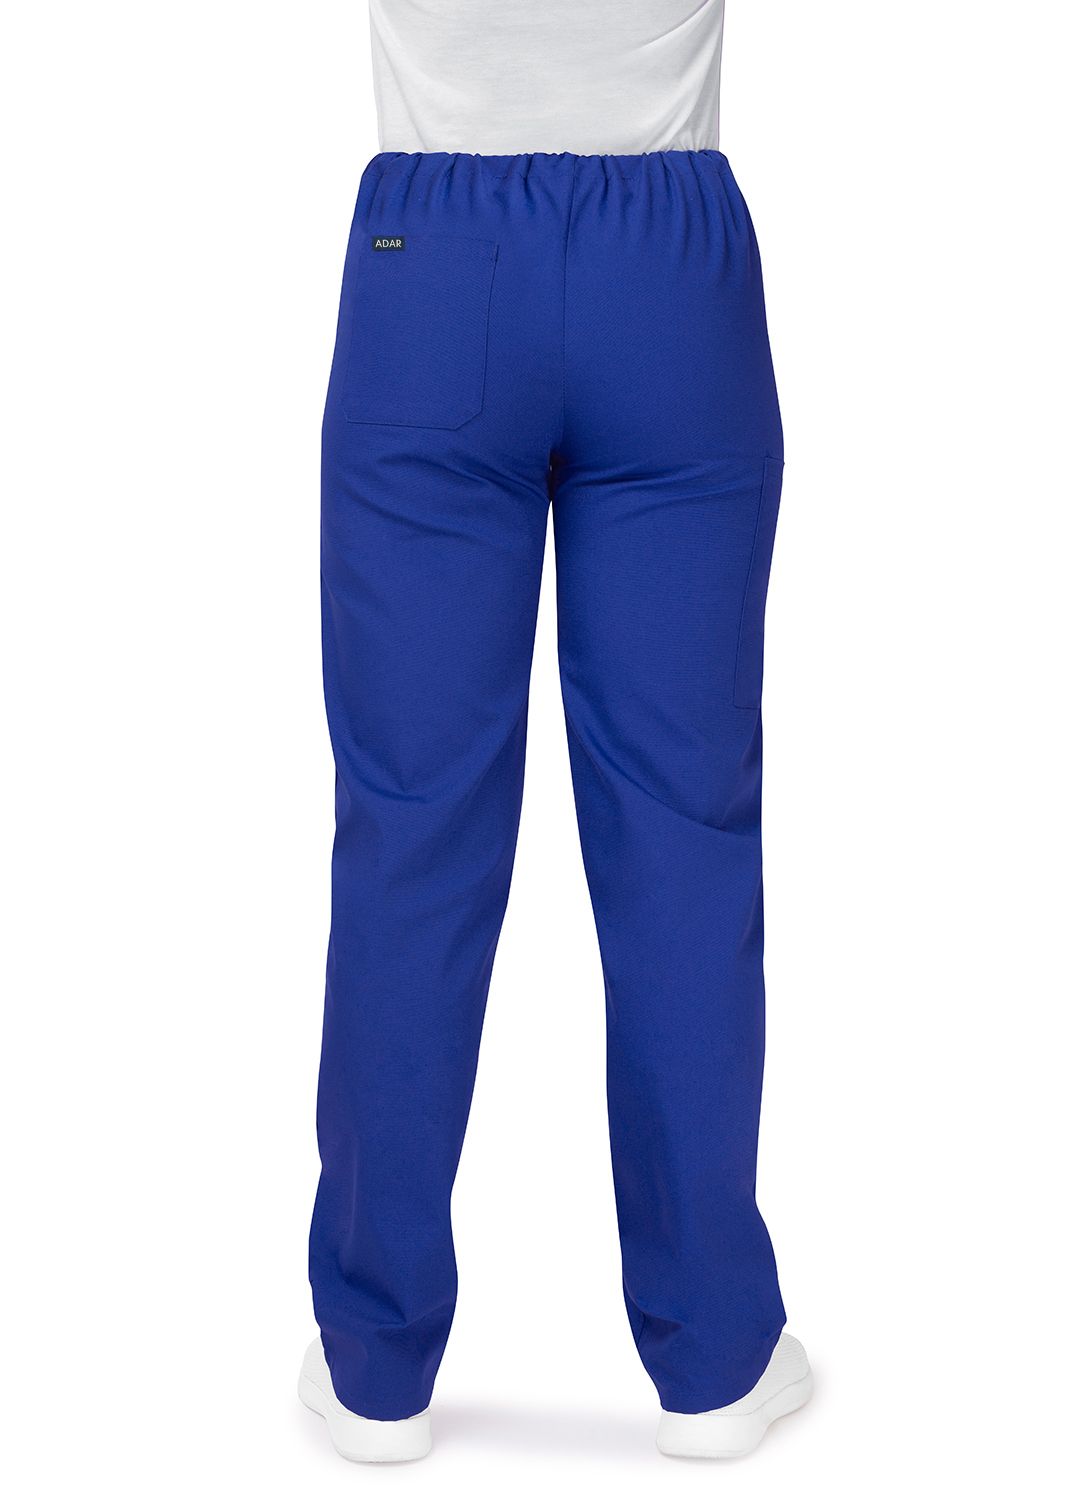 Unisex Drawstring Pants by Adar XS-5X / Royal Blue